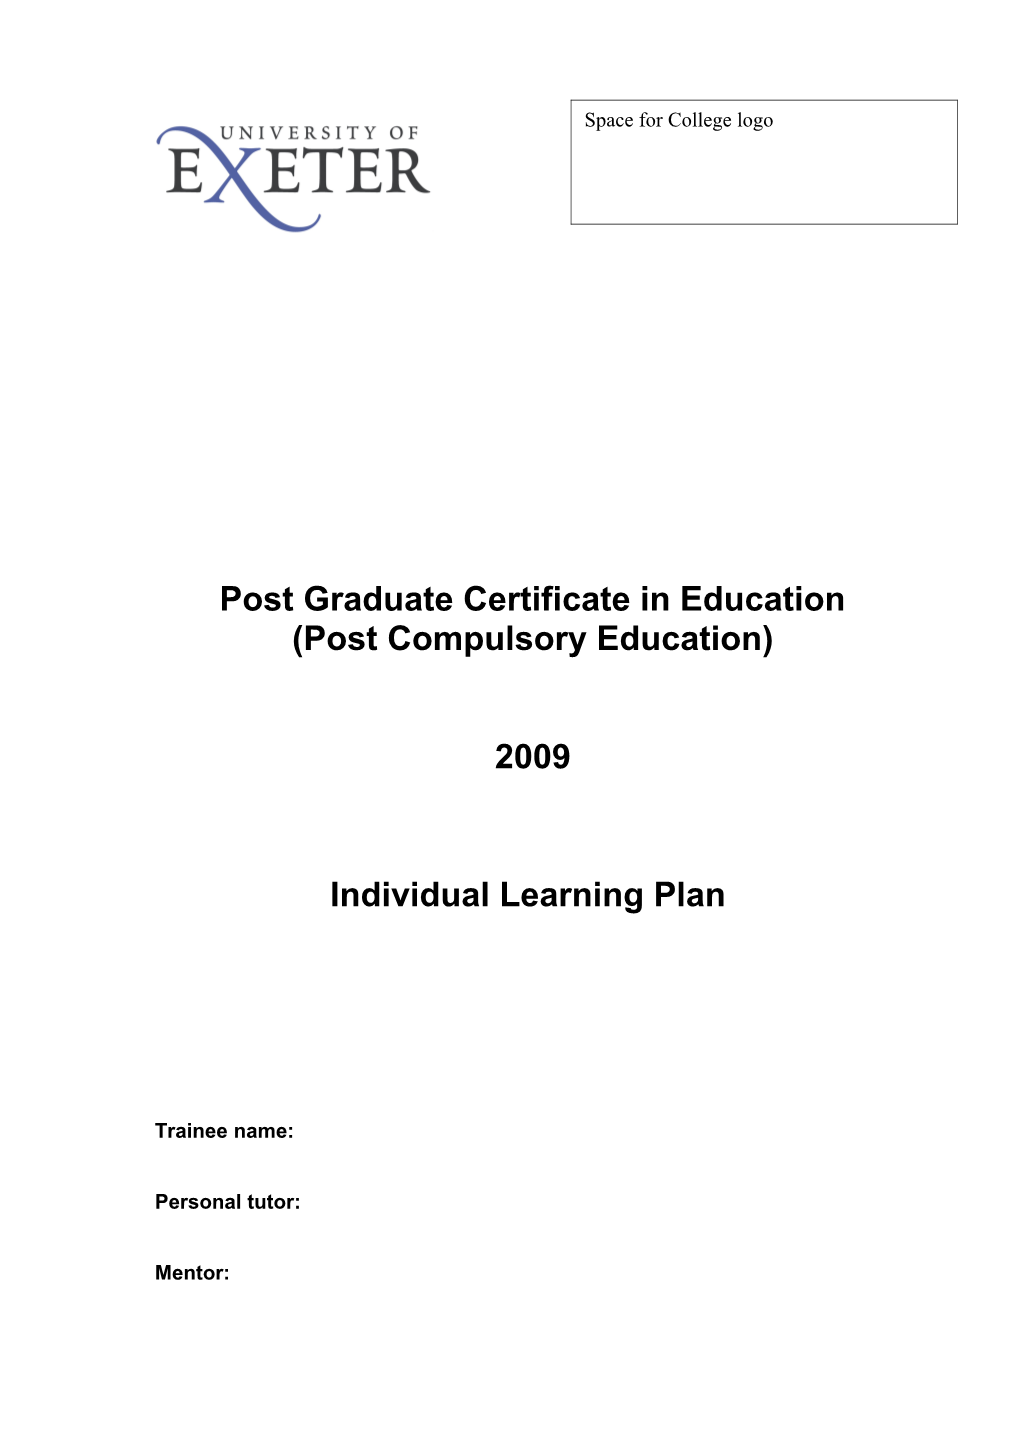 Post Gradate Certificate in Education